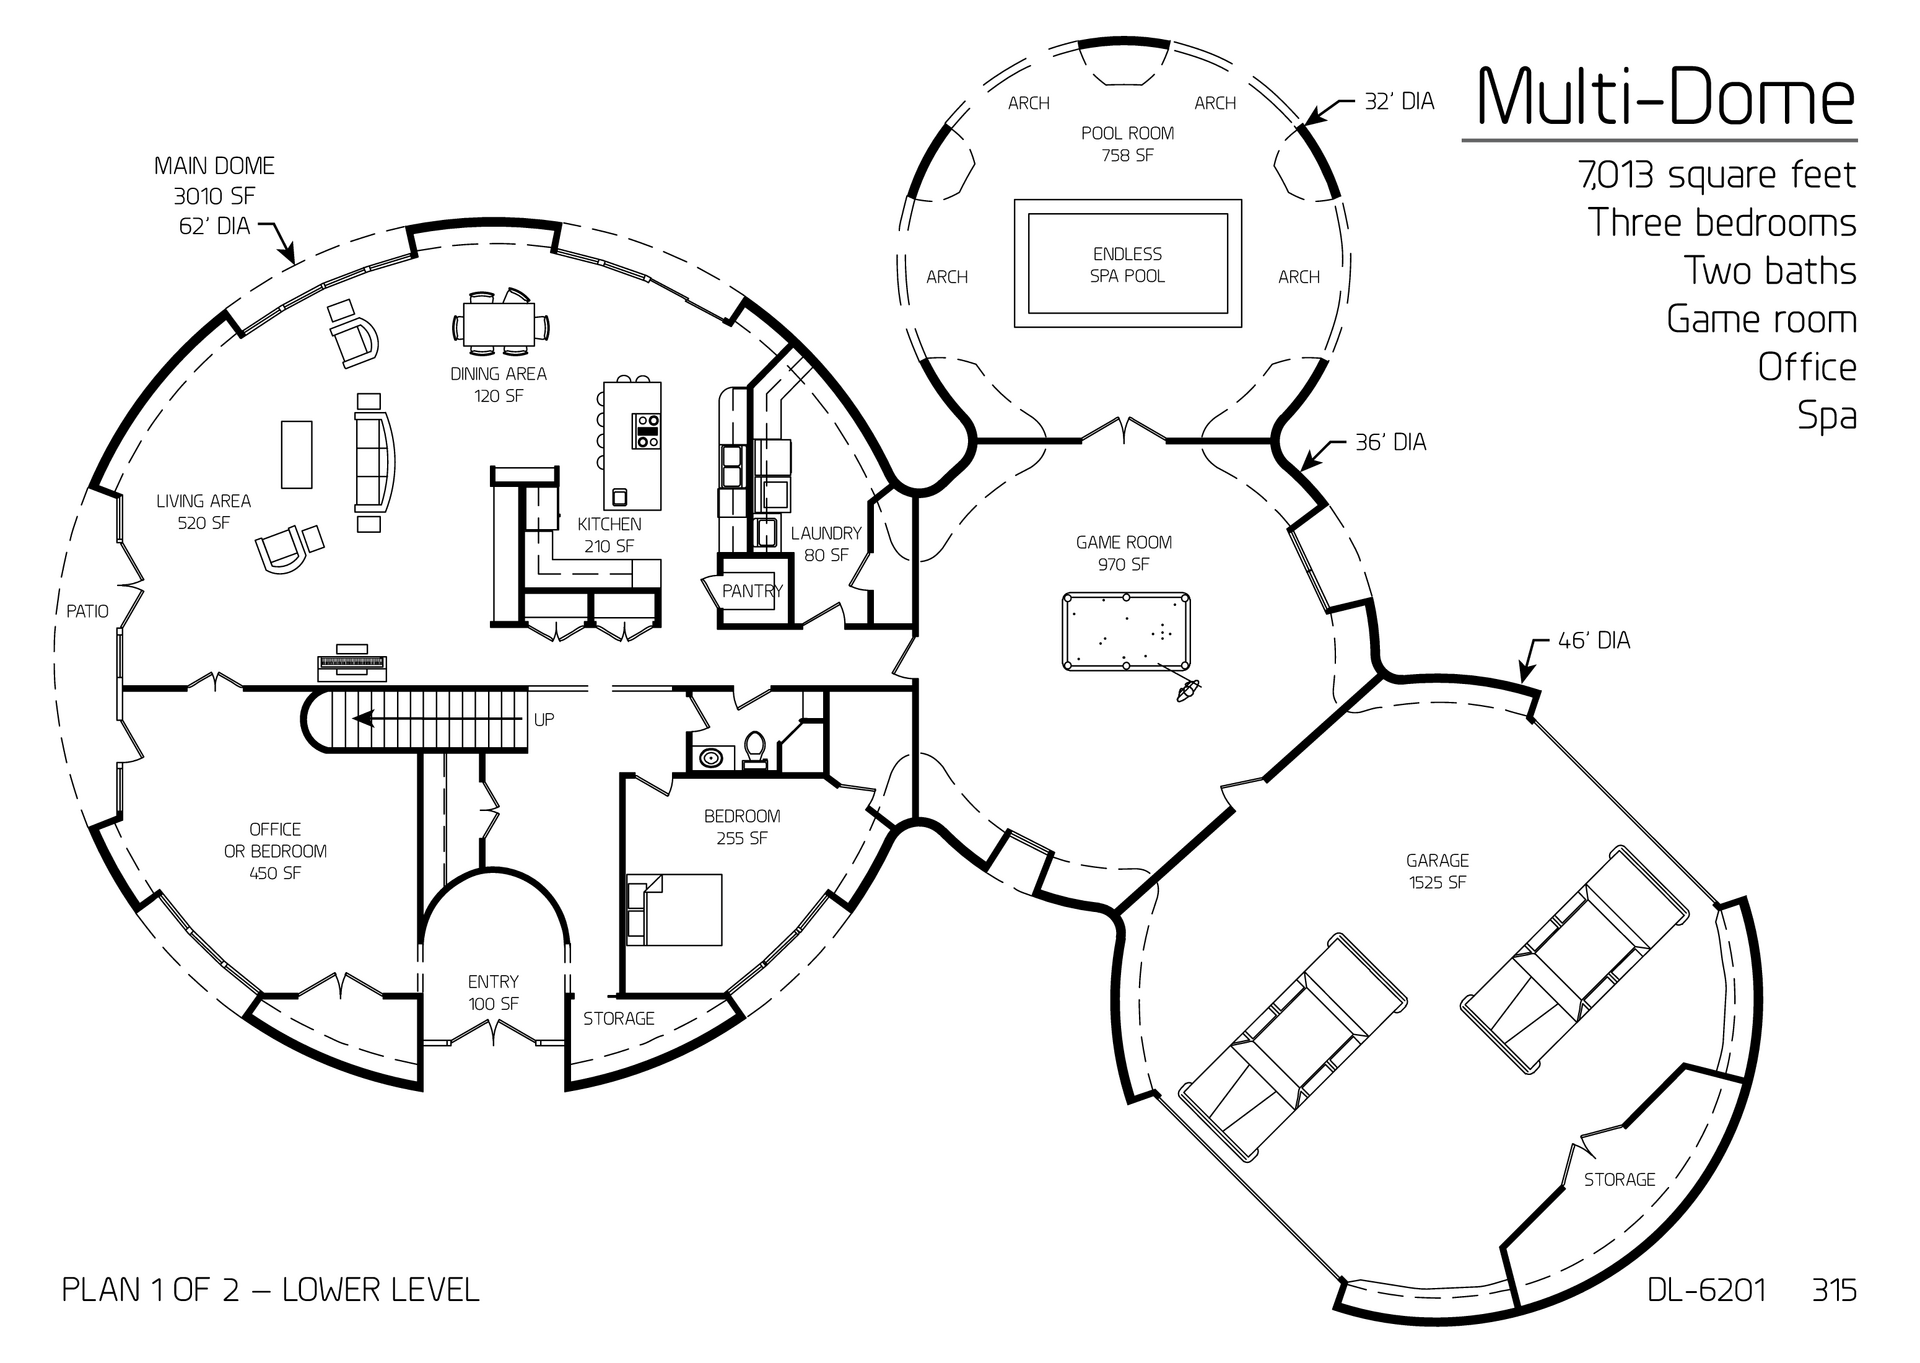 Multi-Dome: Main Floor of 62', 32', 36' and 46' Diameter Domed, 7,013 SF, Three-Bedroom, Two-Bath Floor Plan.